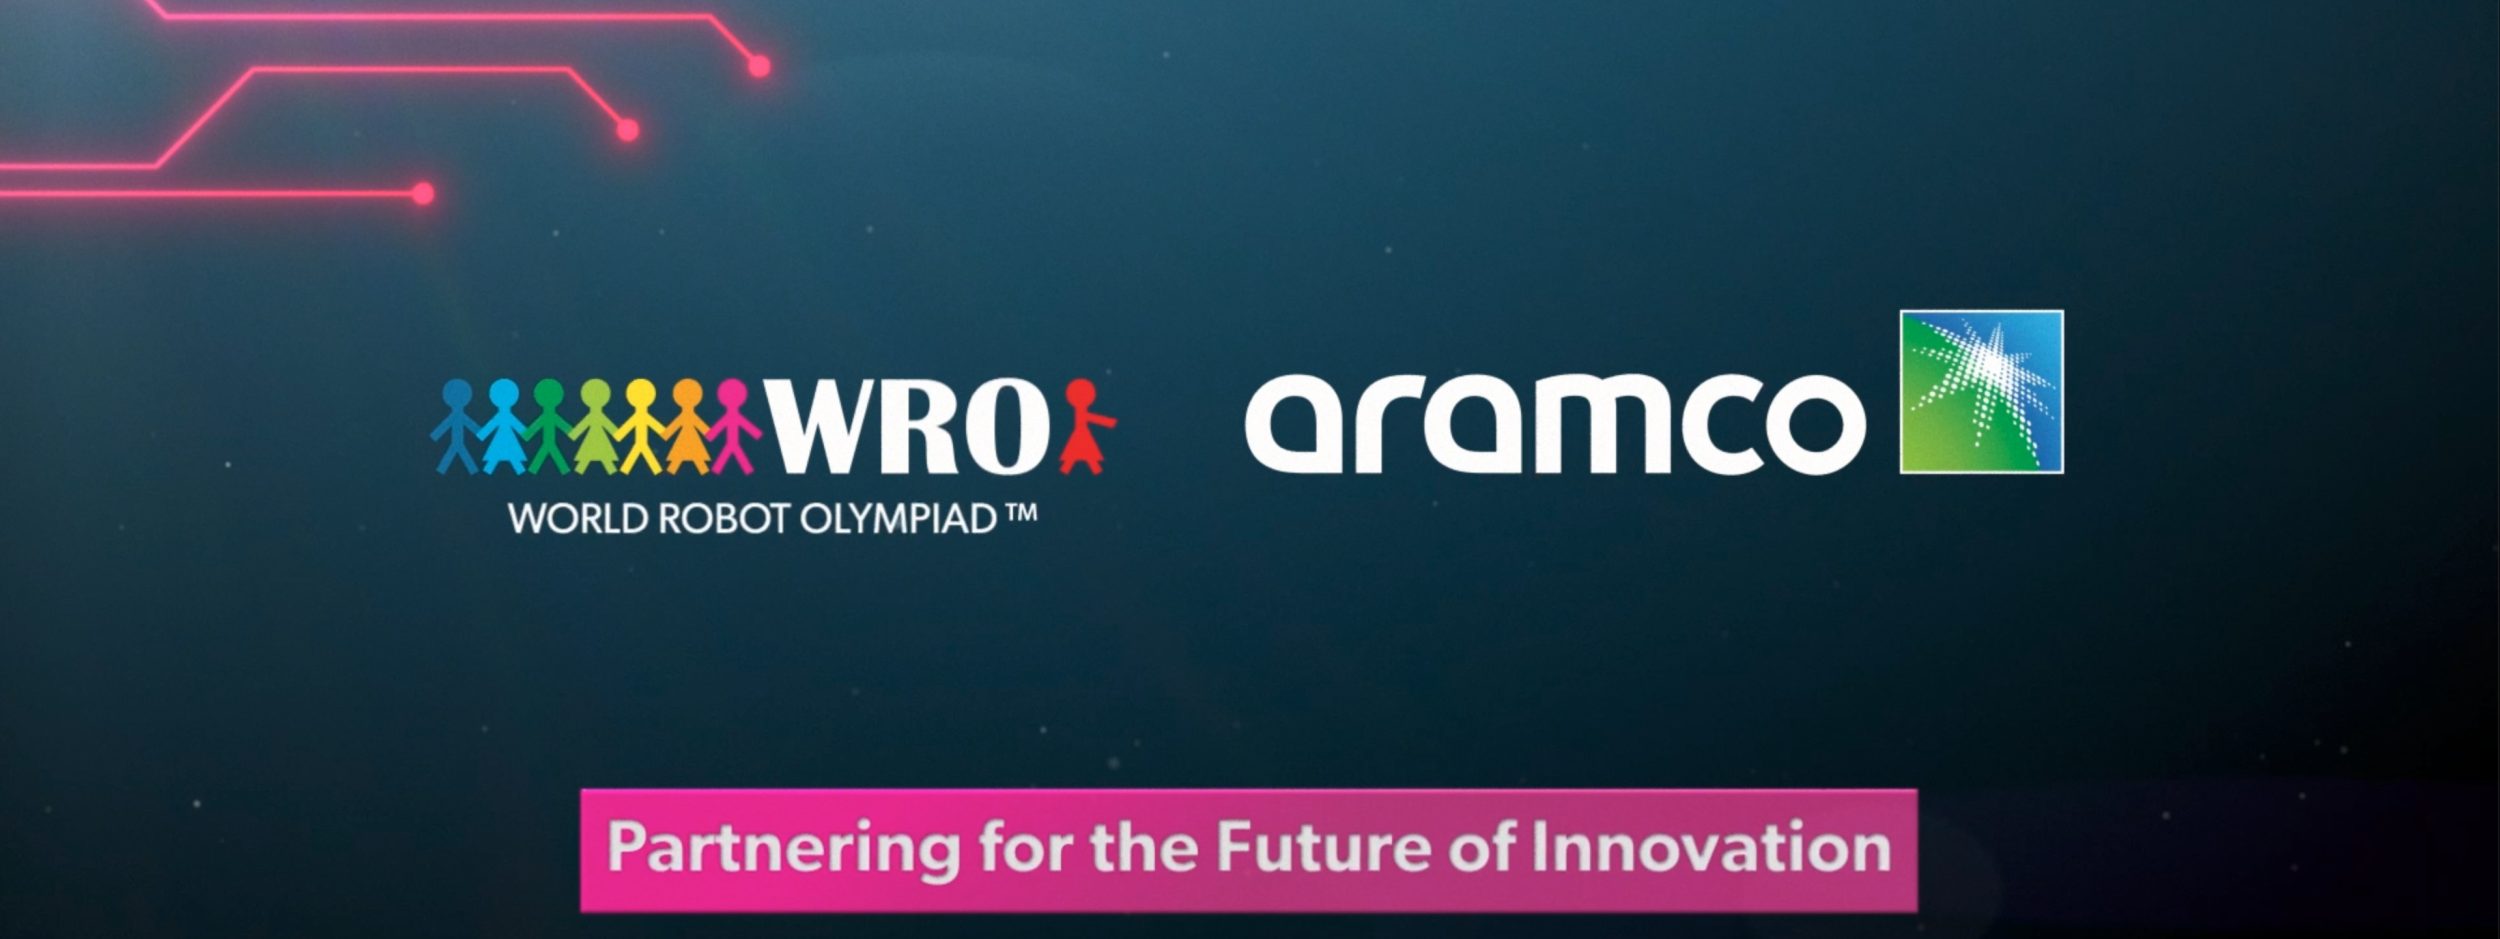 Aramco story hub